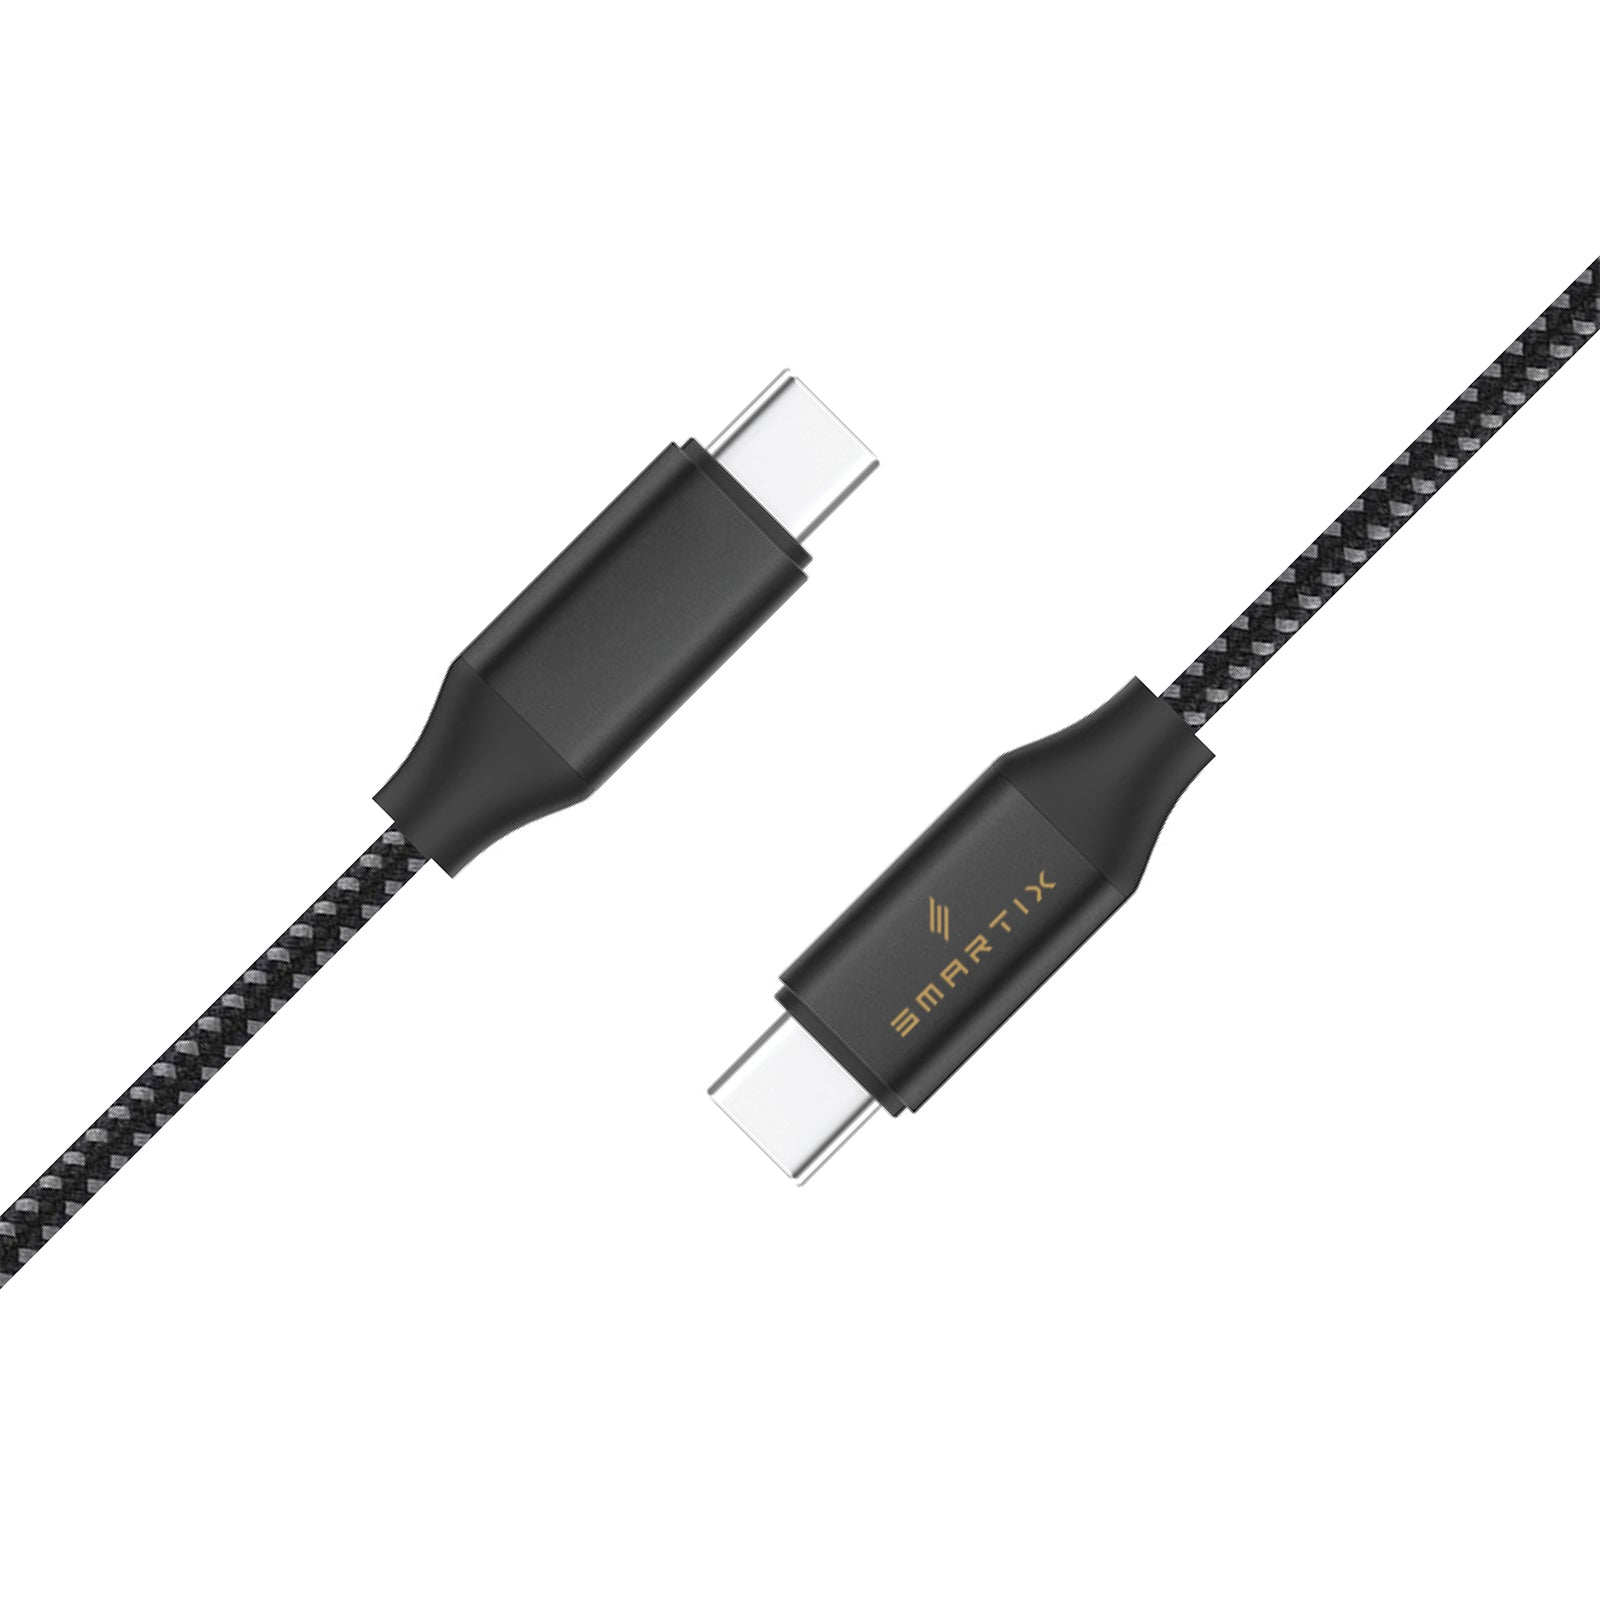 60W USB-C Cable - Smart Infocomm